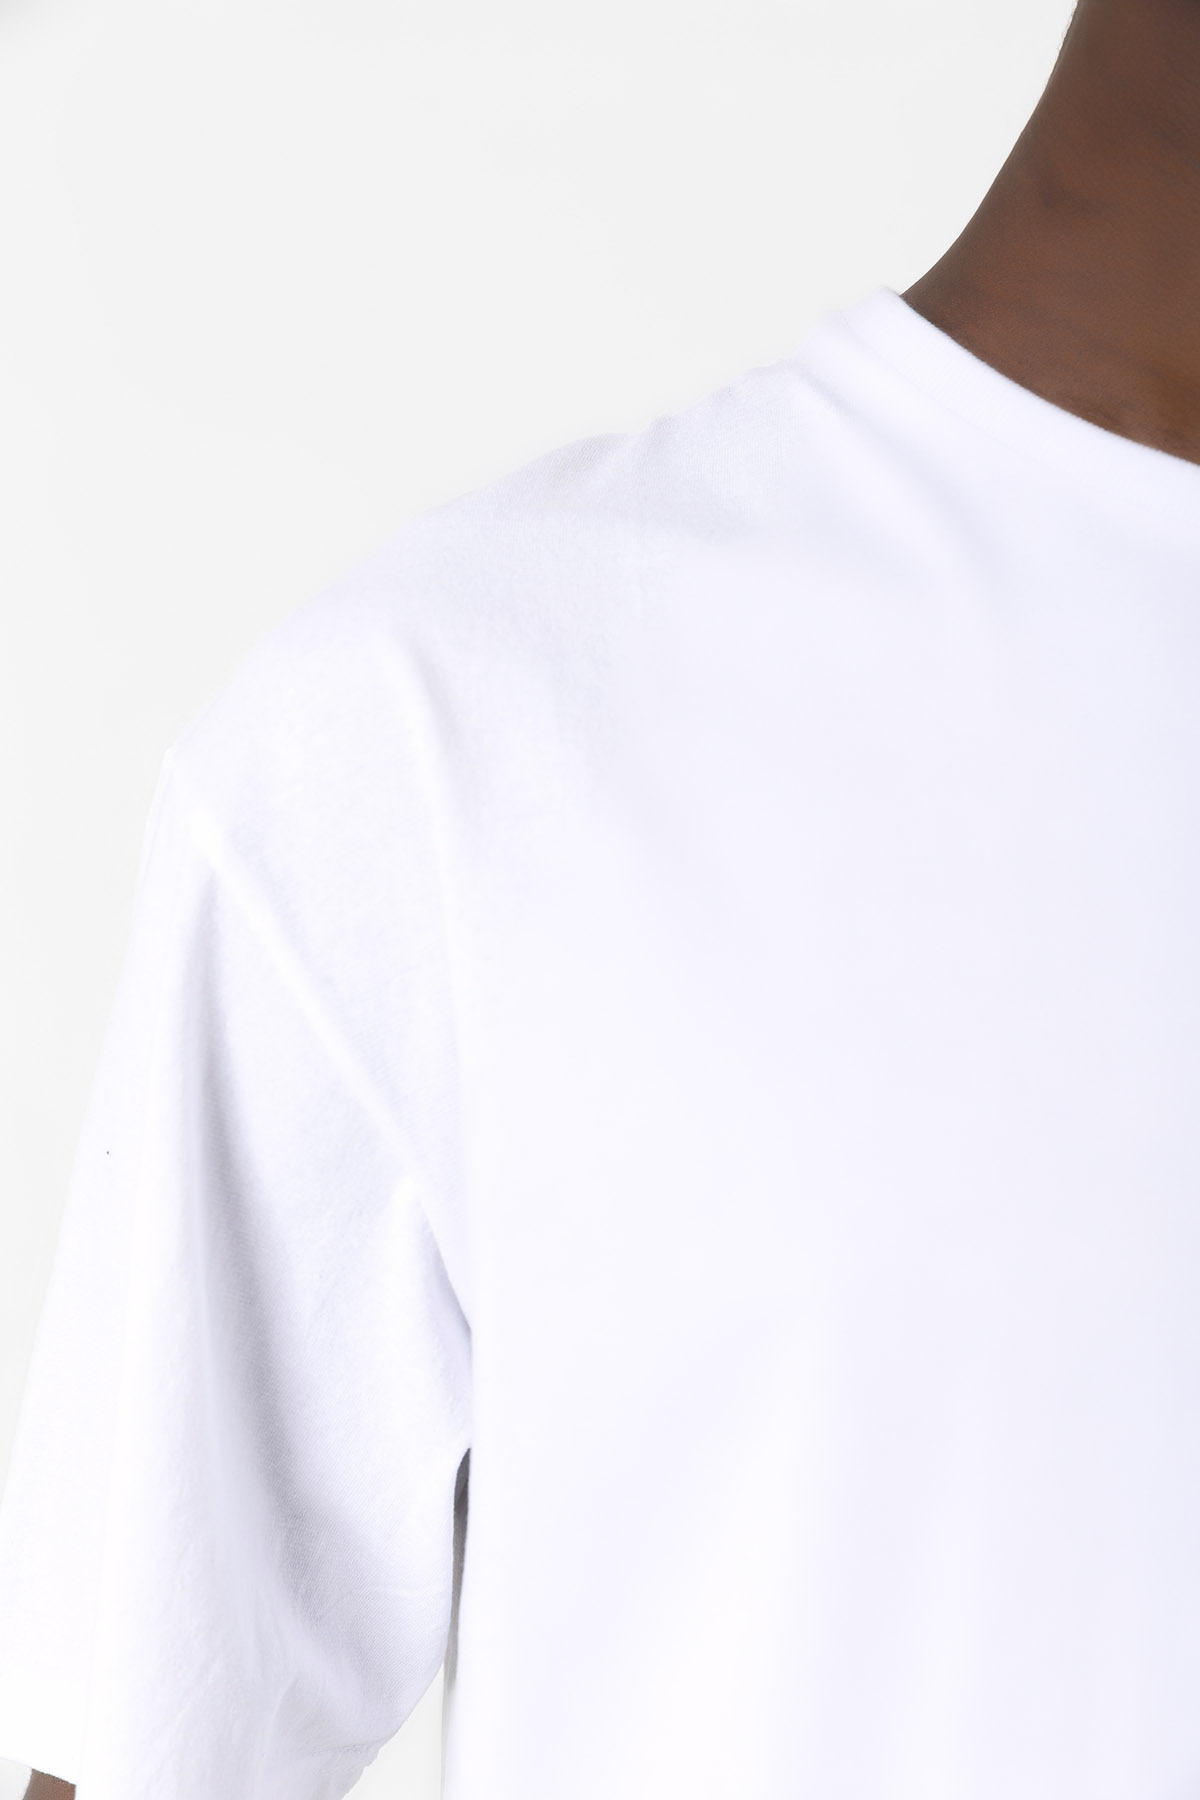 The Umbrella Academy Rain Logo Beyaz Erkek Oversize Tshirt